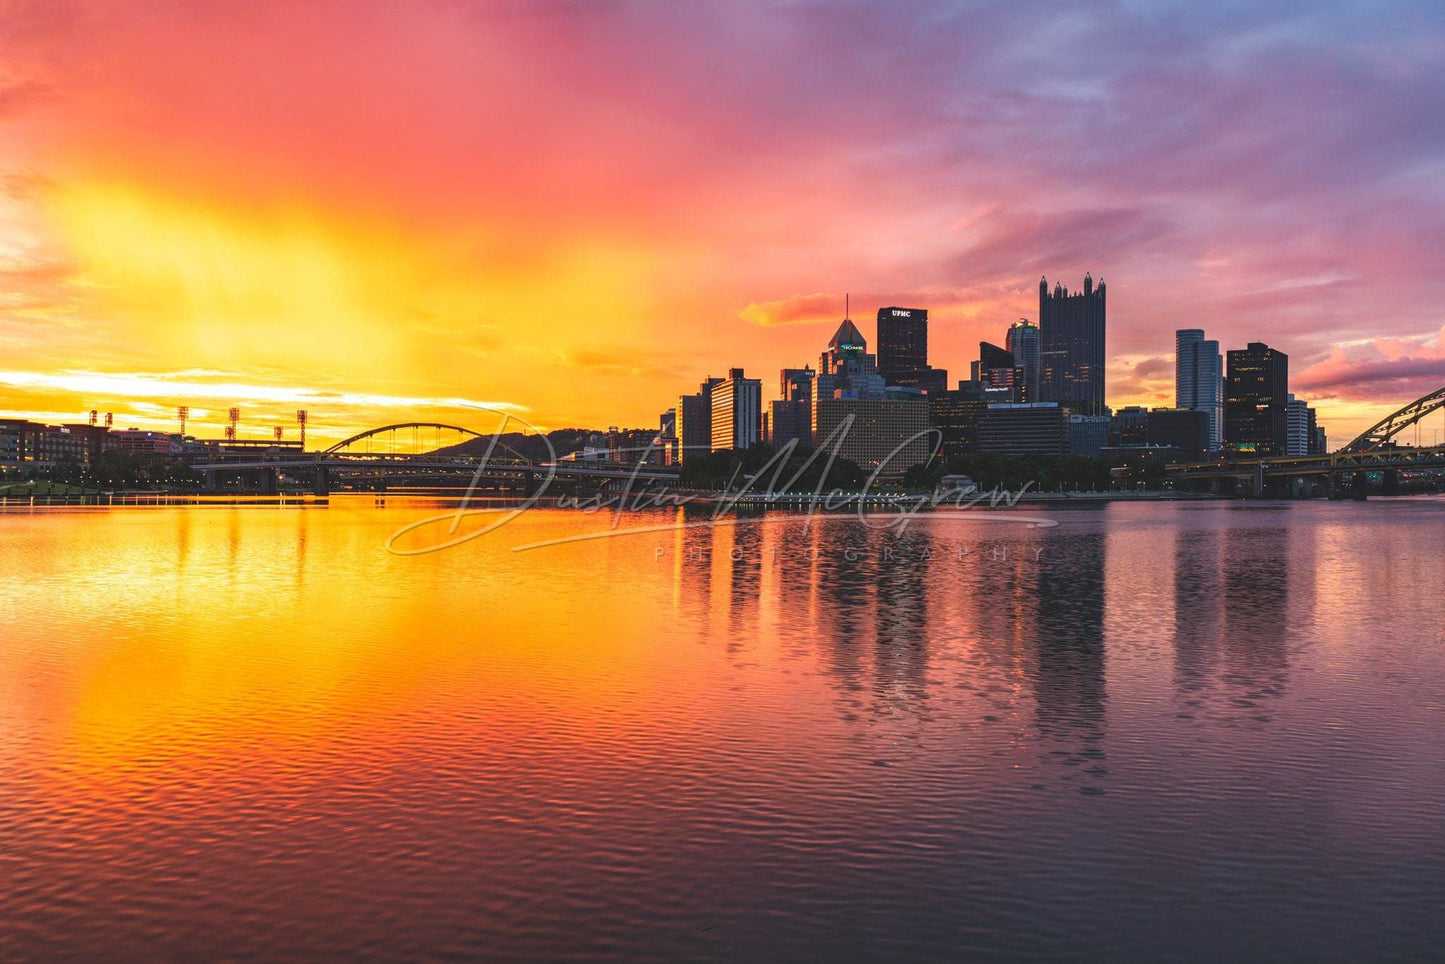 Pittsburgh Art - A Rainy Sunrise Skyline Photo Available On Metal Canvas Photo Paper